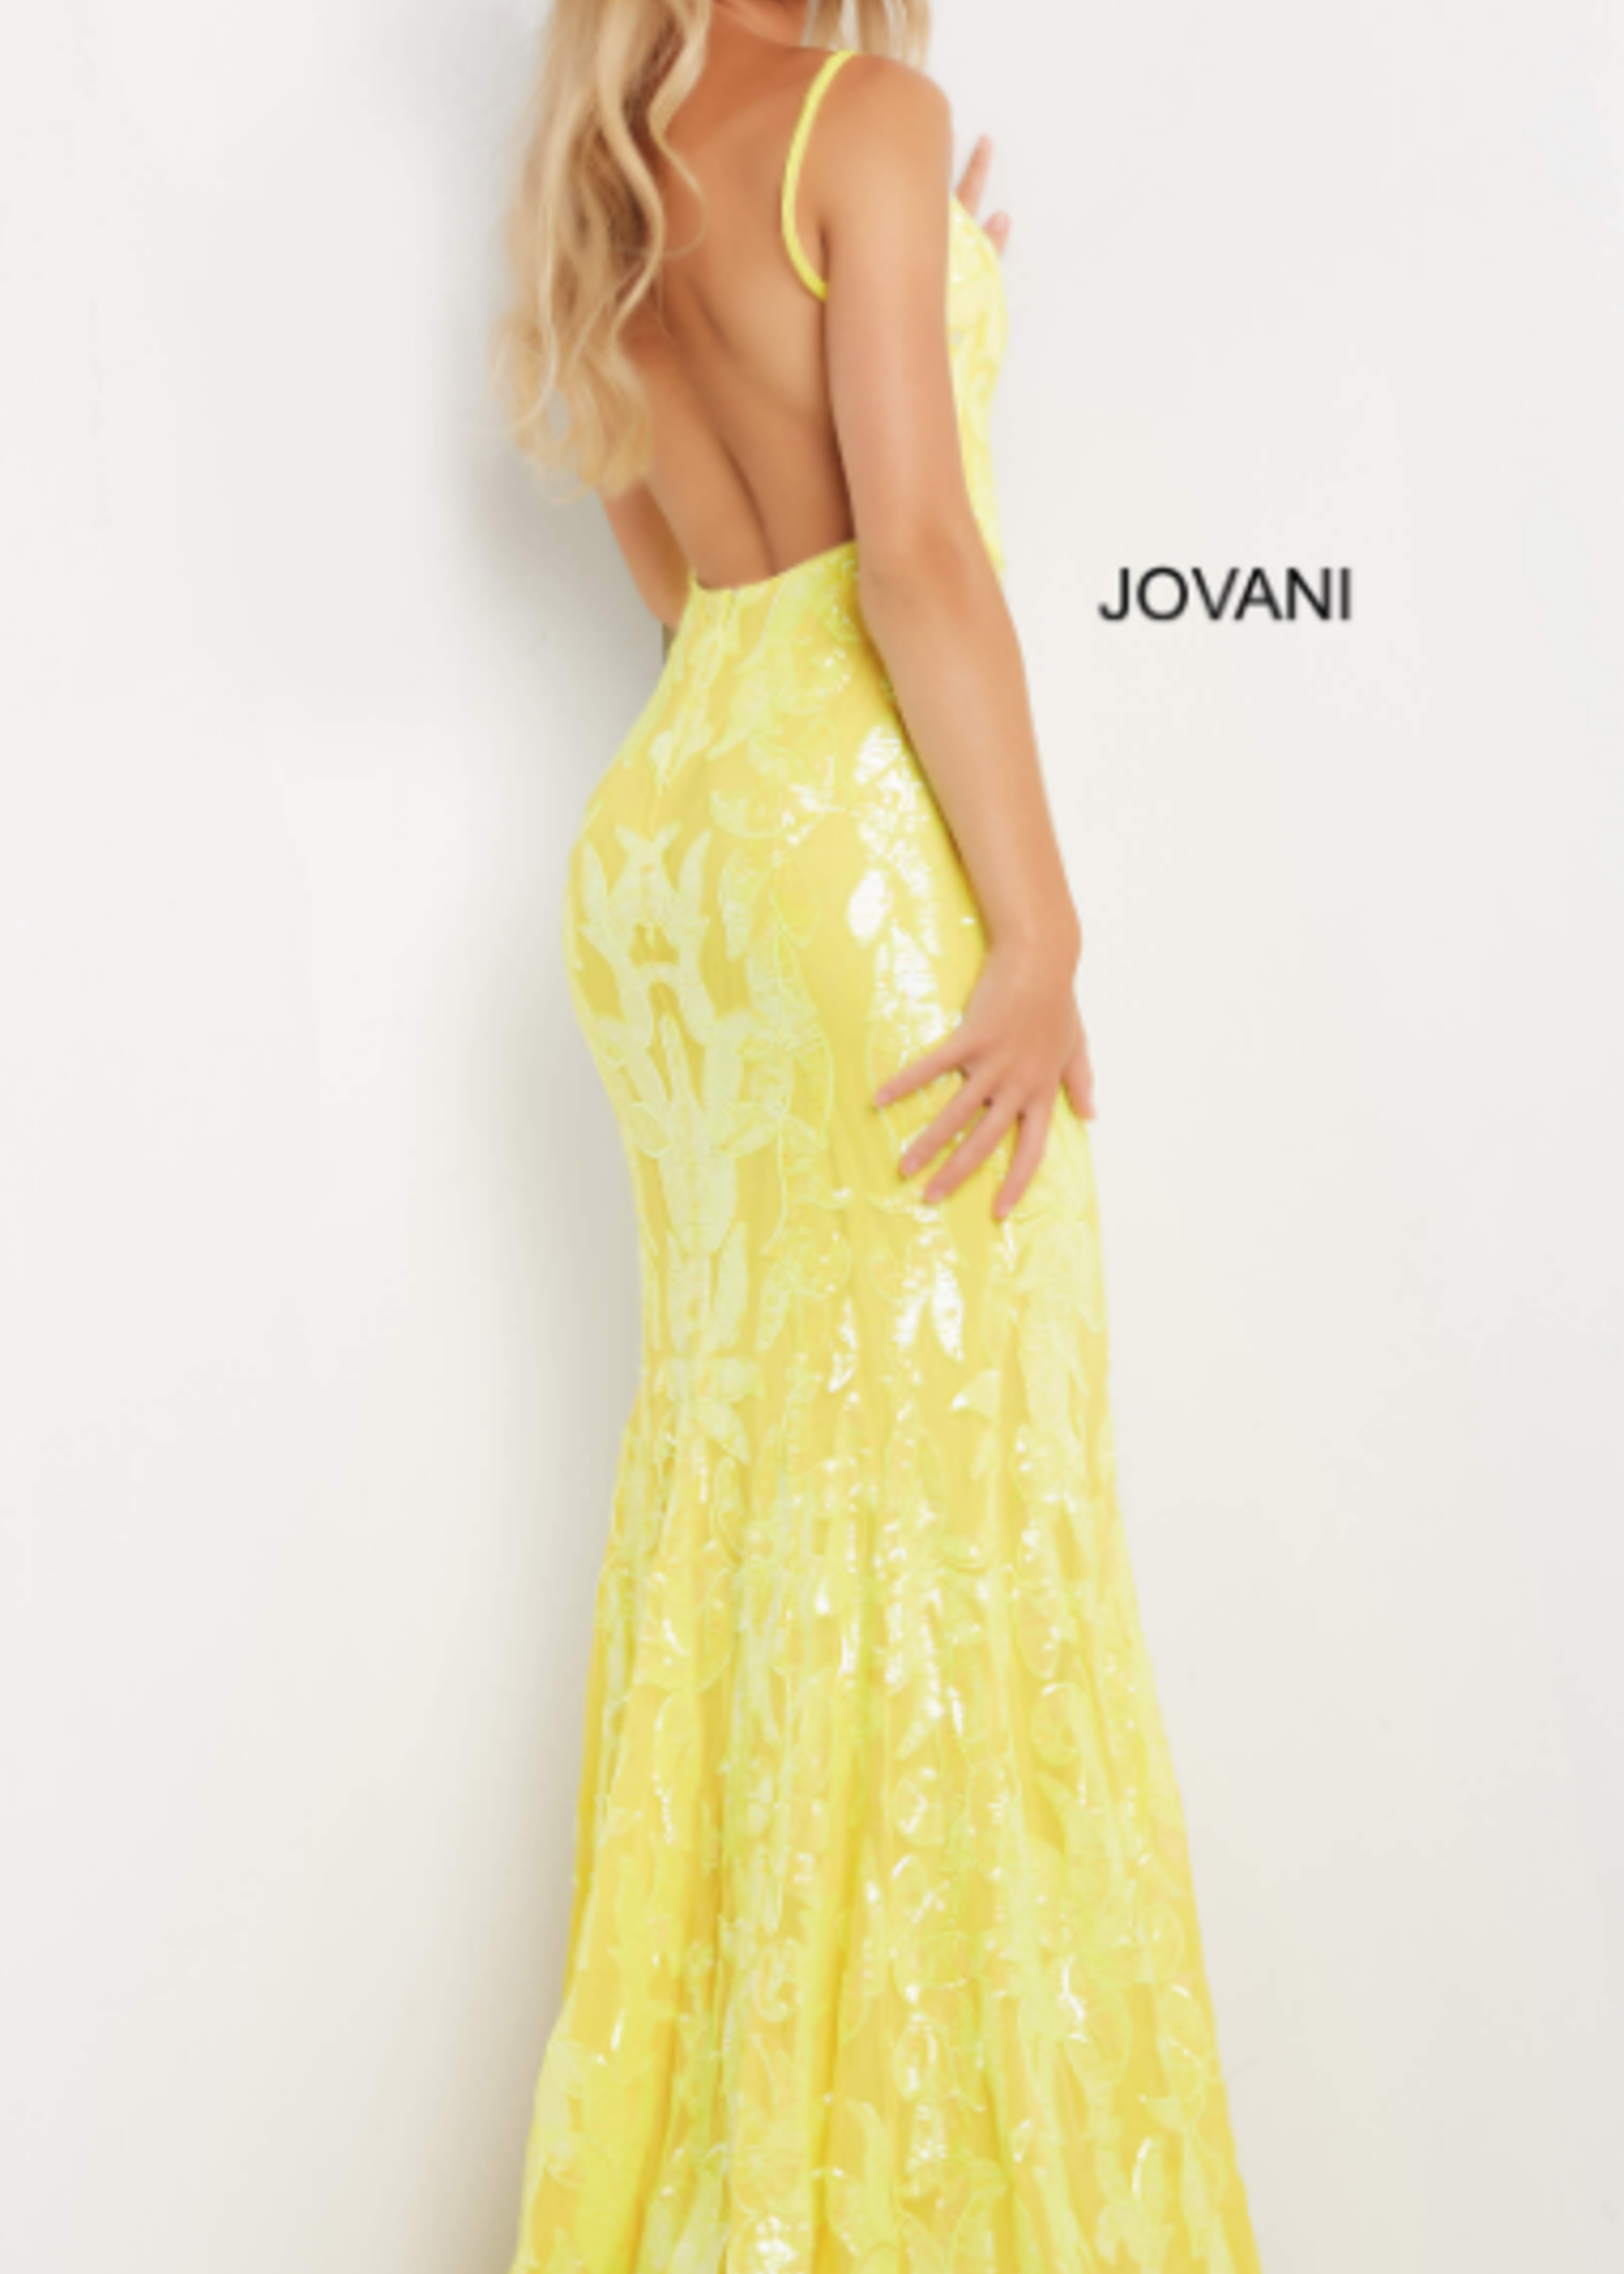 Jovani Dream Maker Yellow Formal Dress